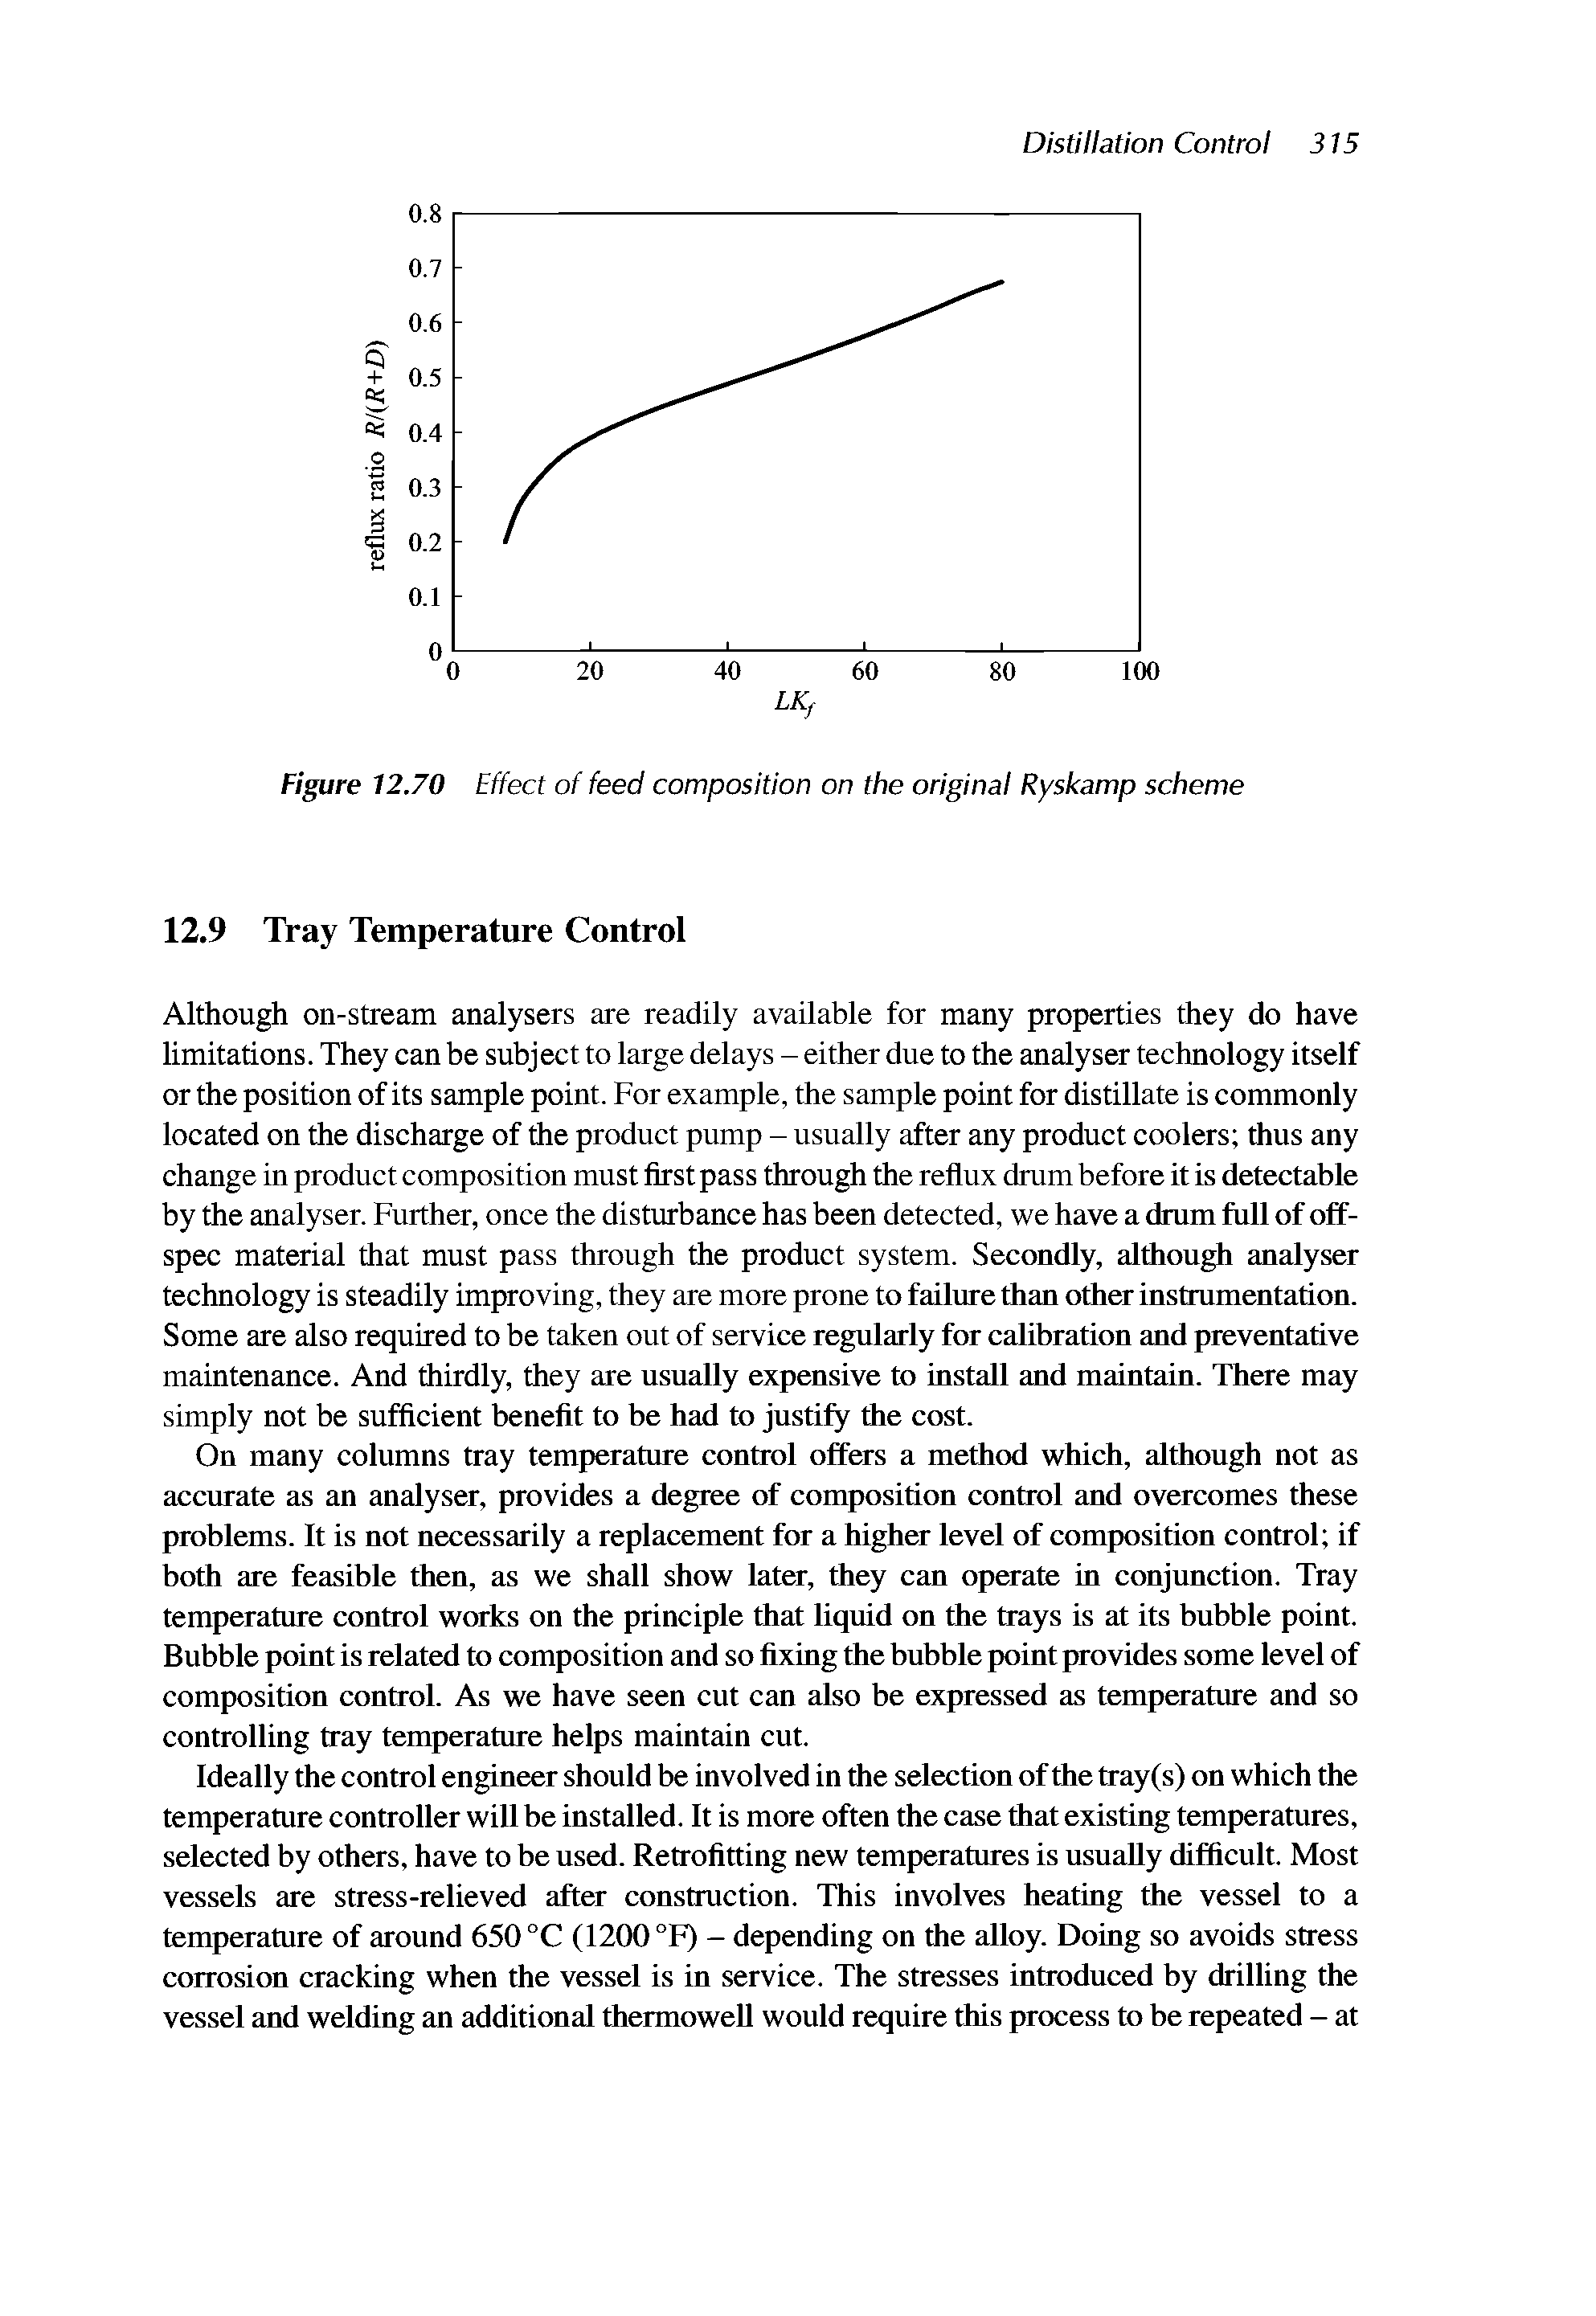 Figure 12.70 Effect of feed composition on the original Ryskamp scheme...